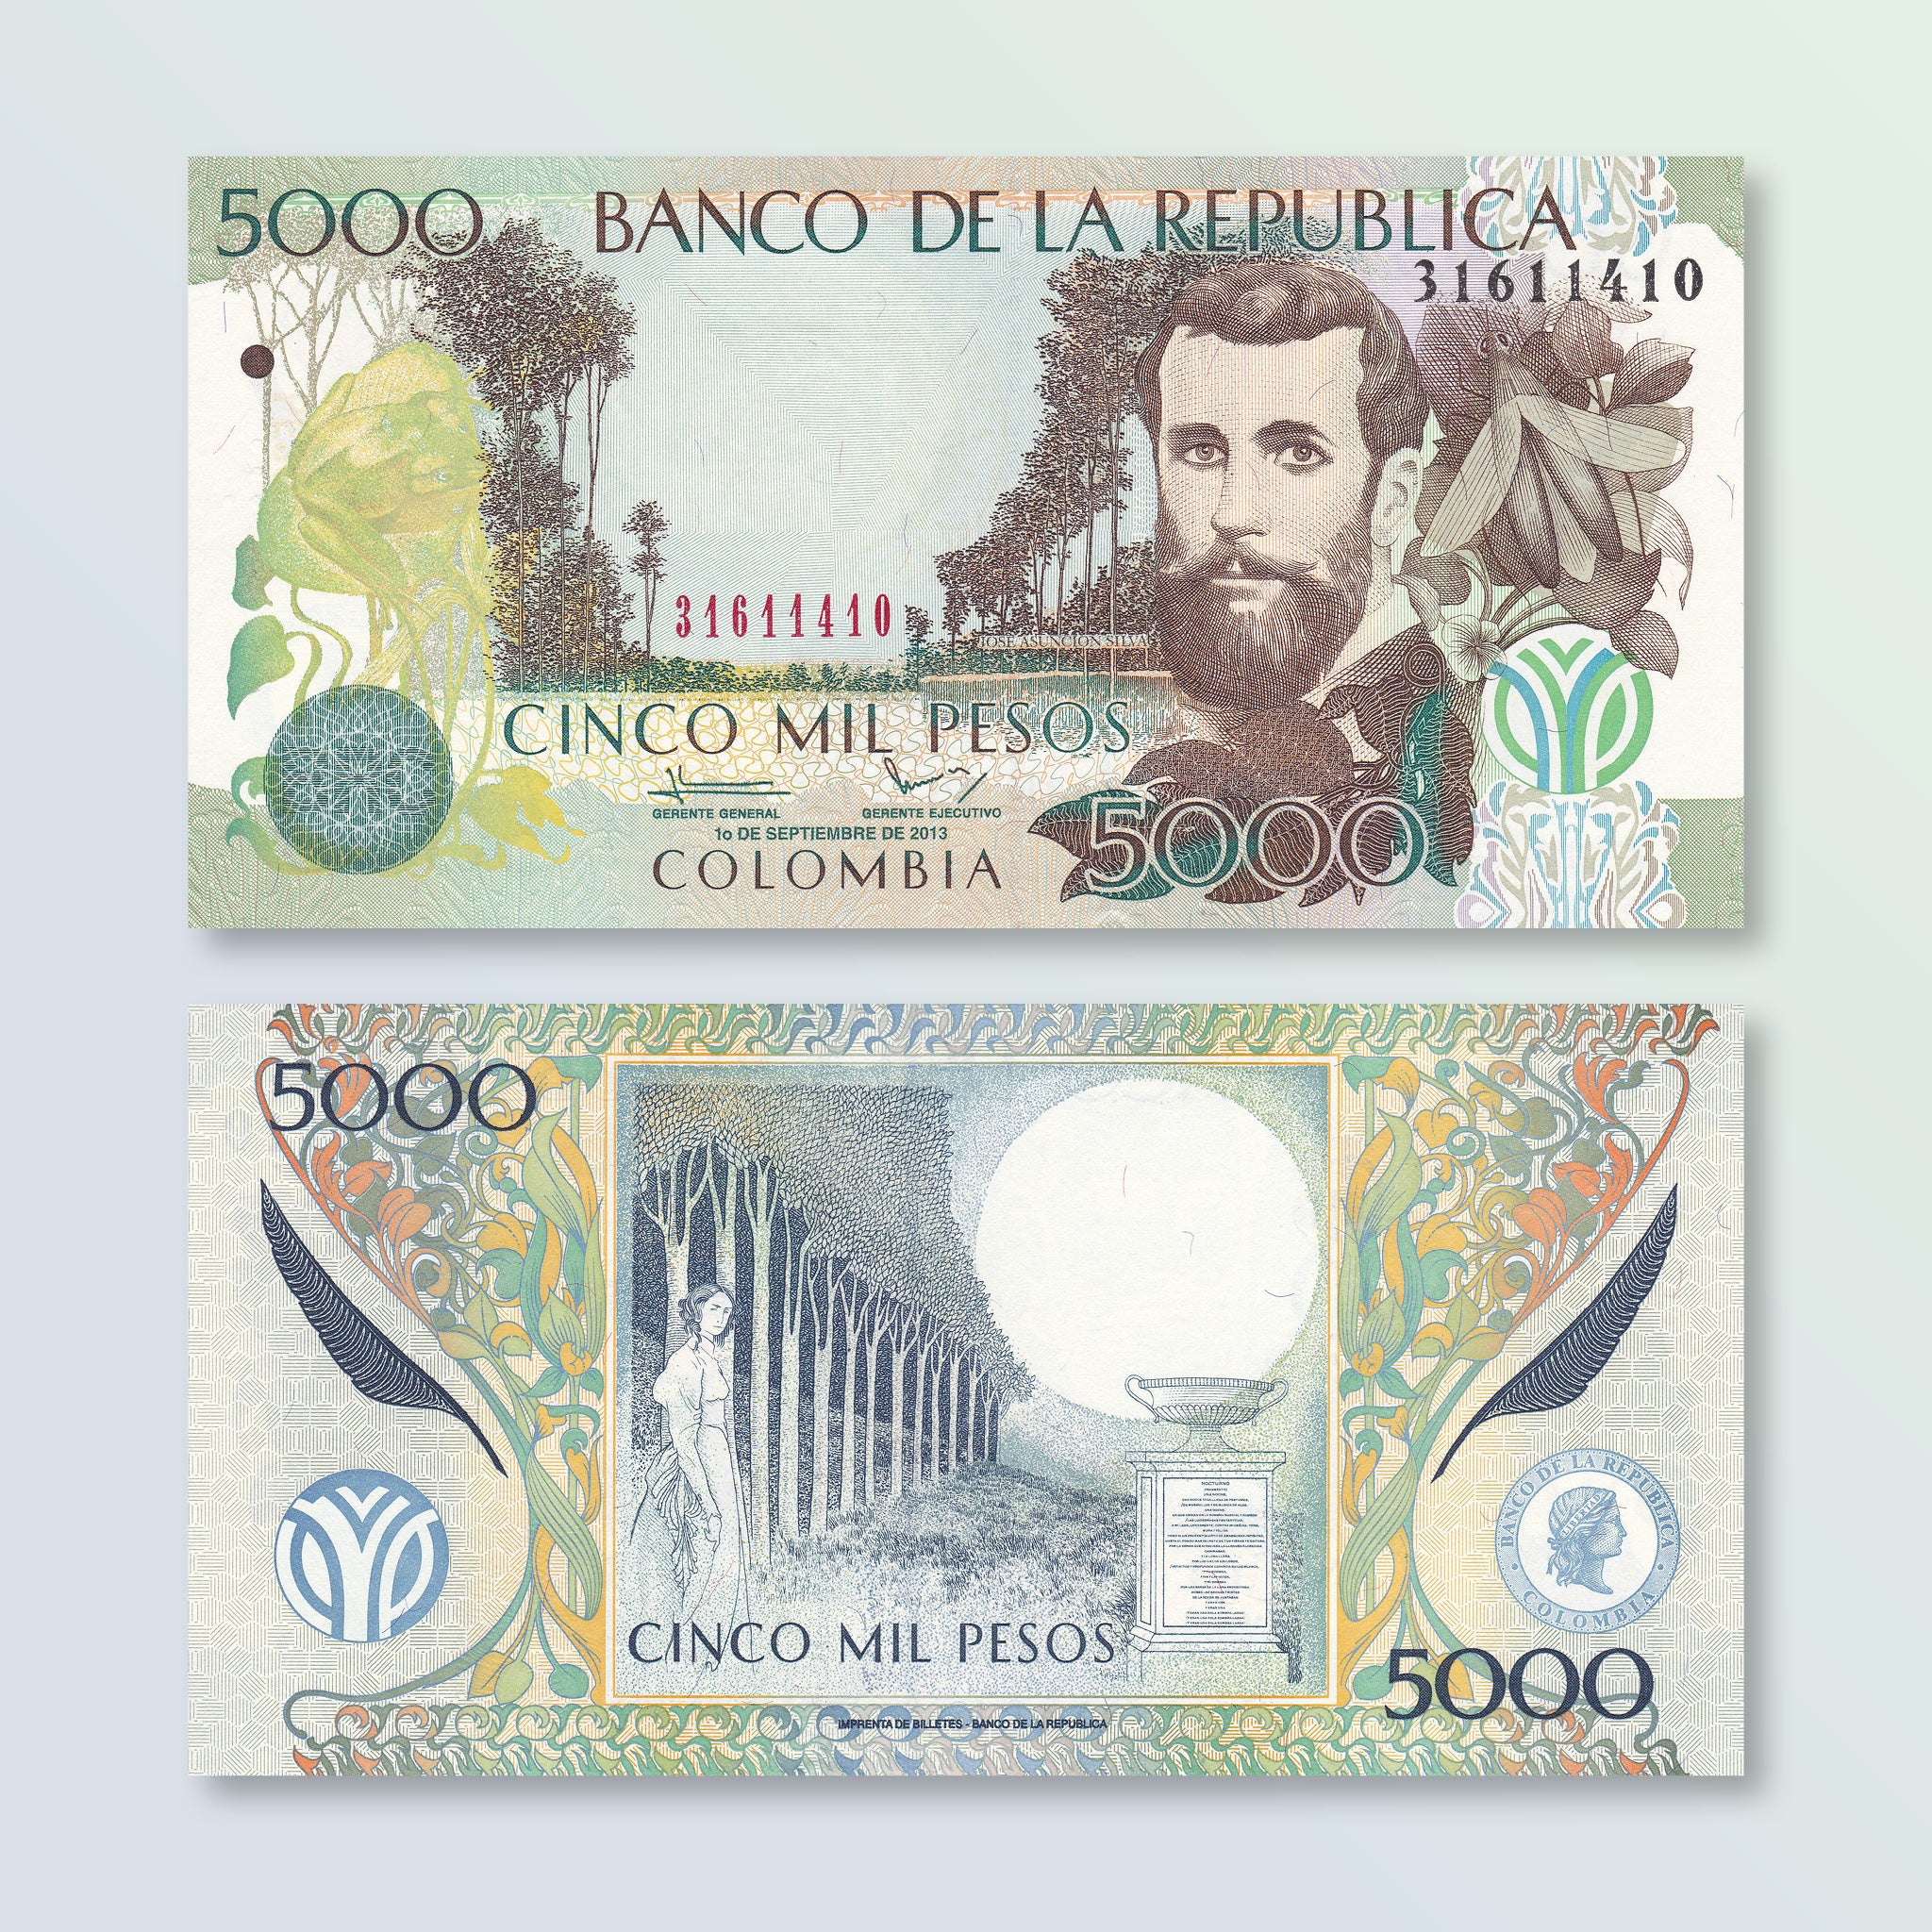 Colombia 5000 Pesos, 2013, B989s, P452p, UNC - Robert's World Money - World Banknotes